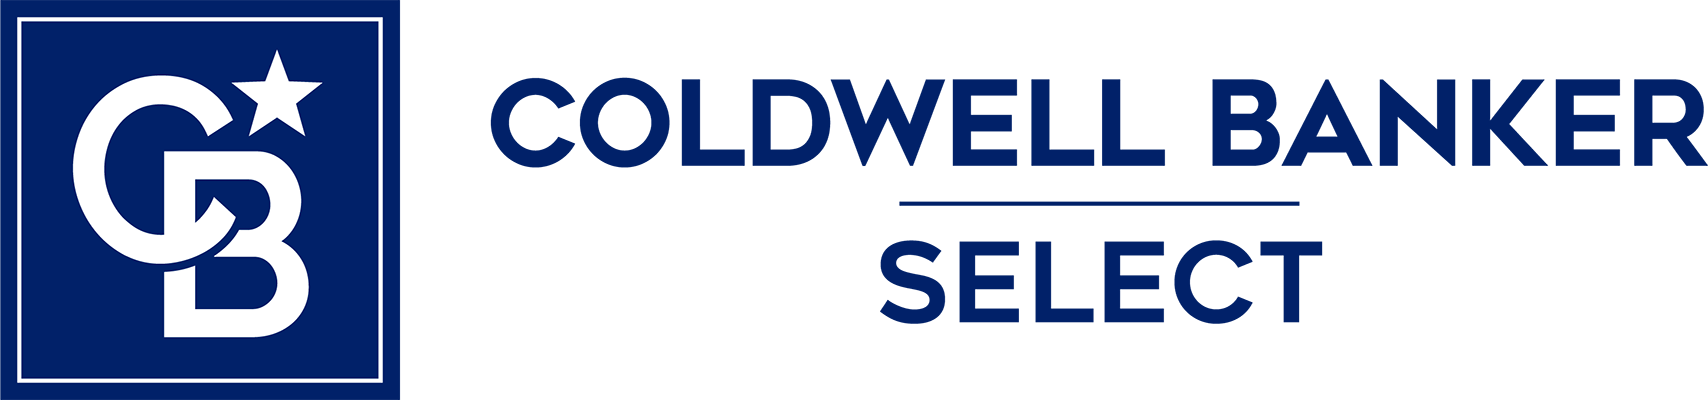 AMC Mtg Owasso - Coldwell Banker Select Logo